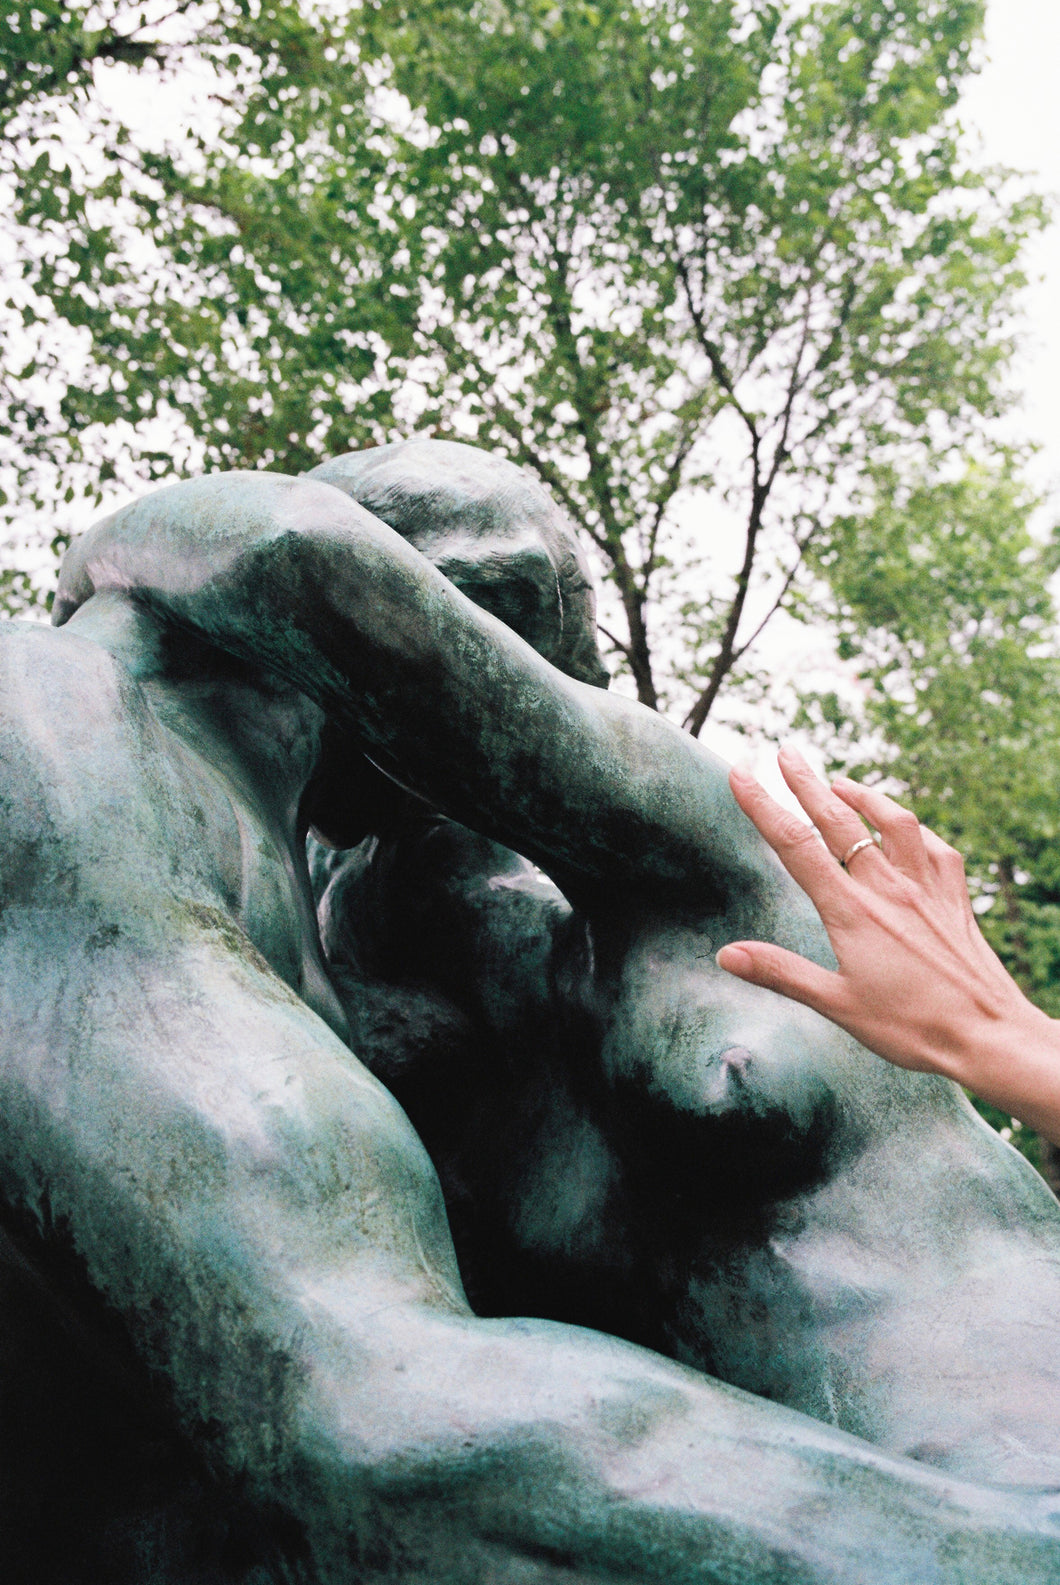 Mahala Nuuk – The Kiss by Rodin, Paris